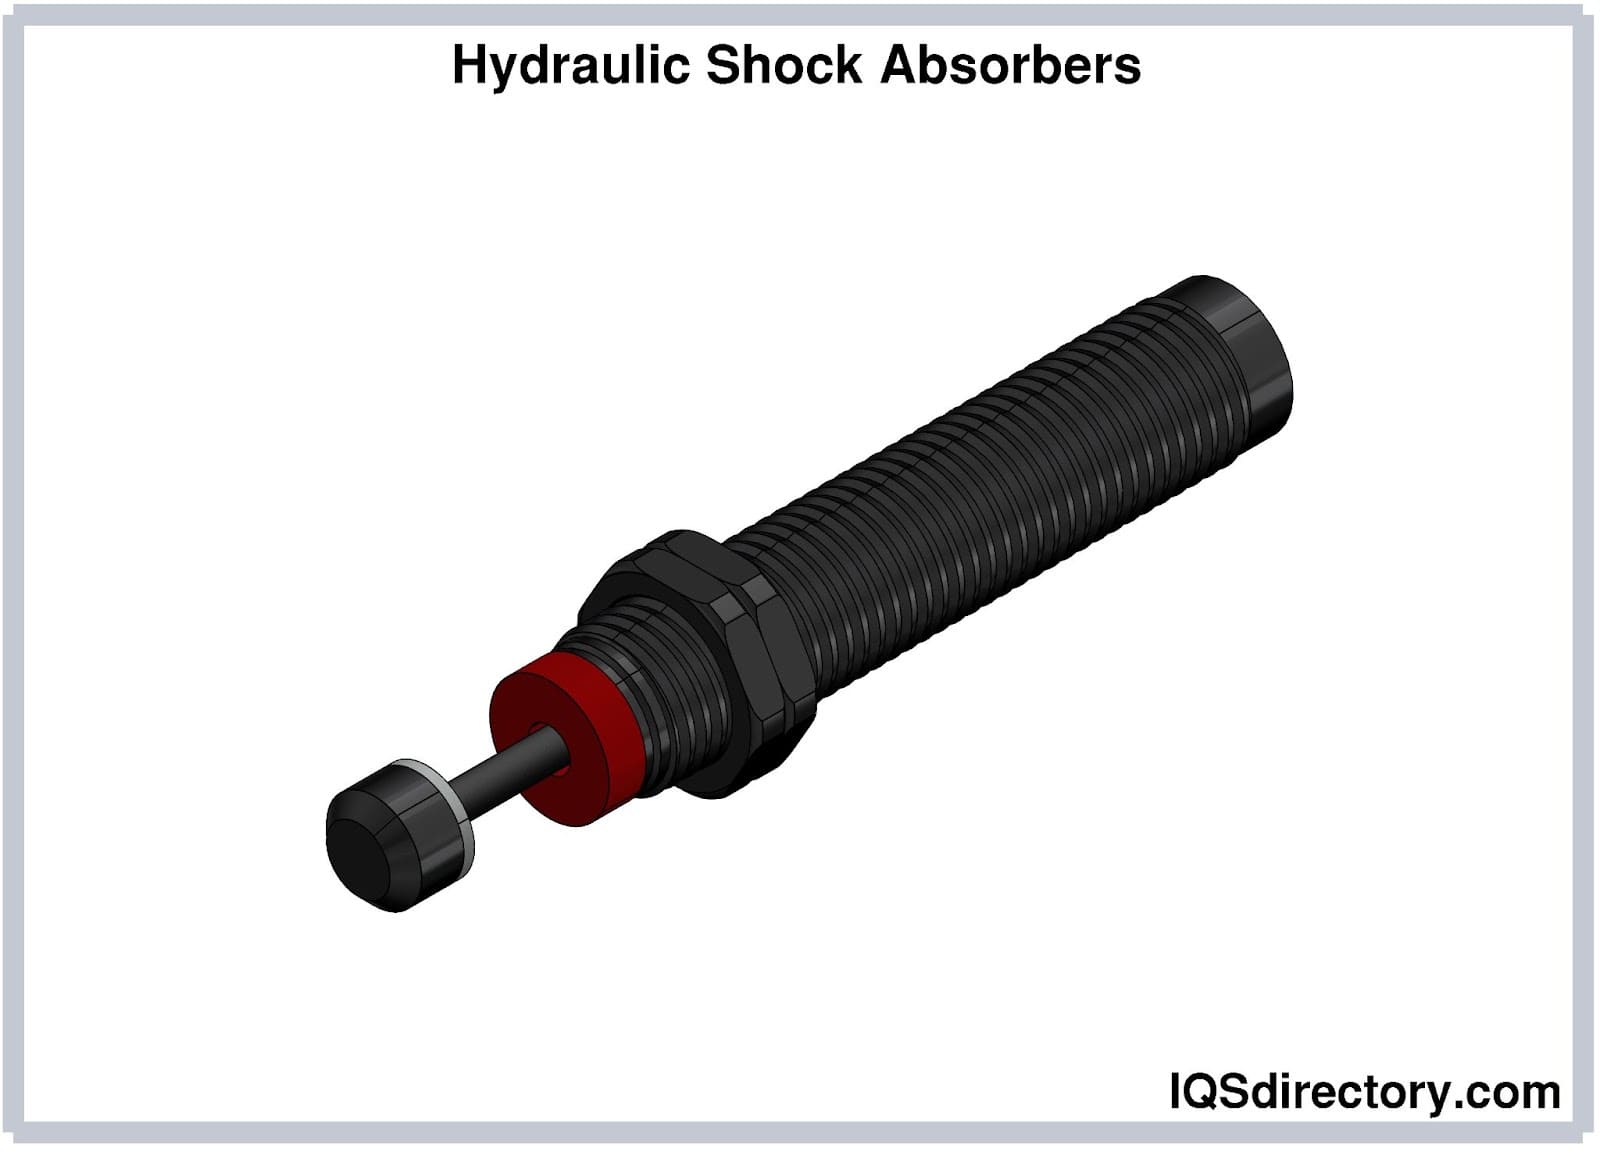 Hydraulic Shock Absorbers